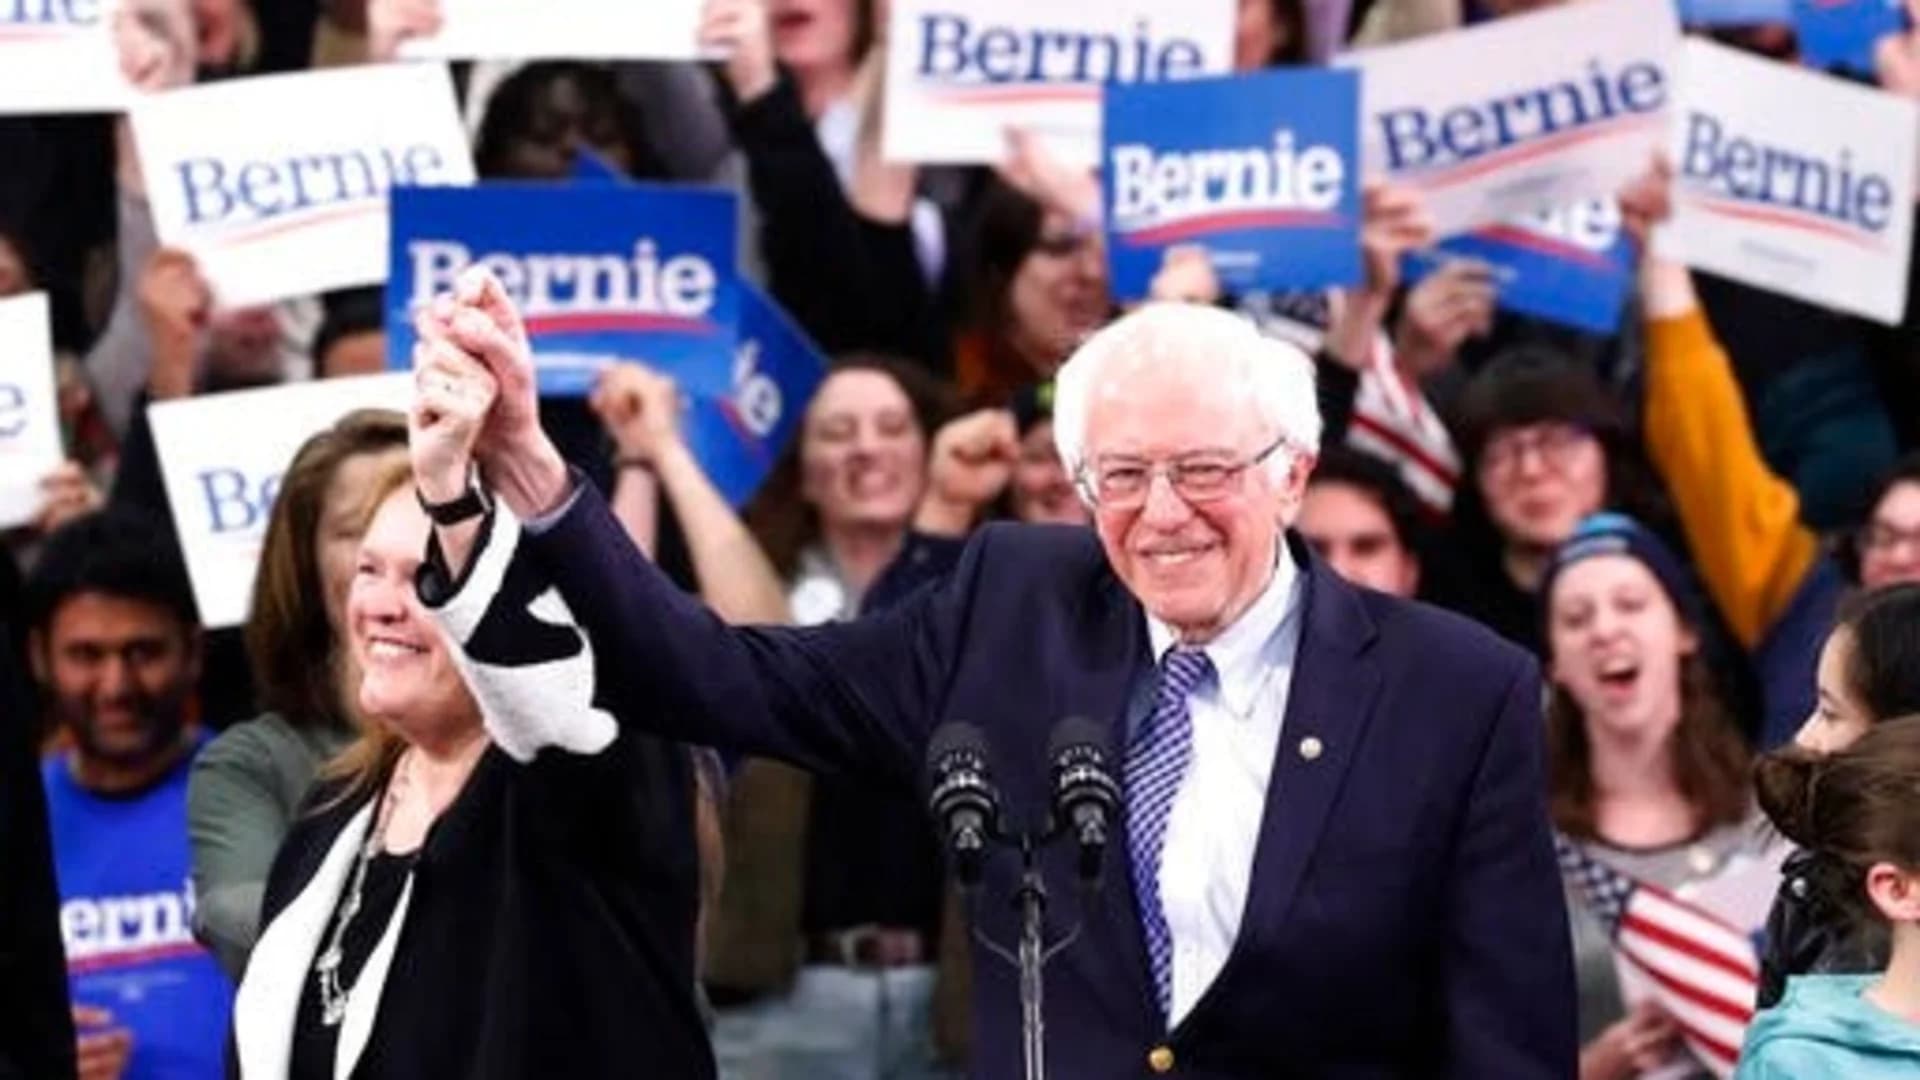 Sanders edges Buttigieg in NH, cementing Dem front-runners